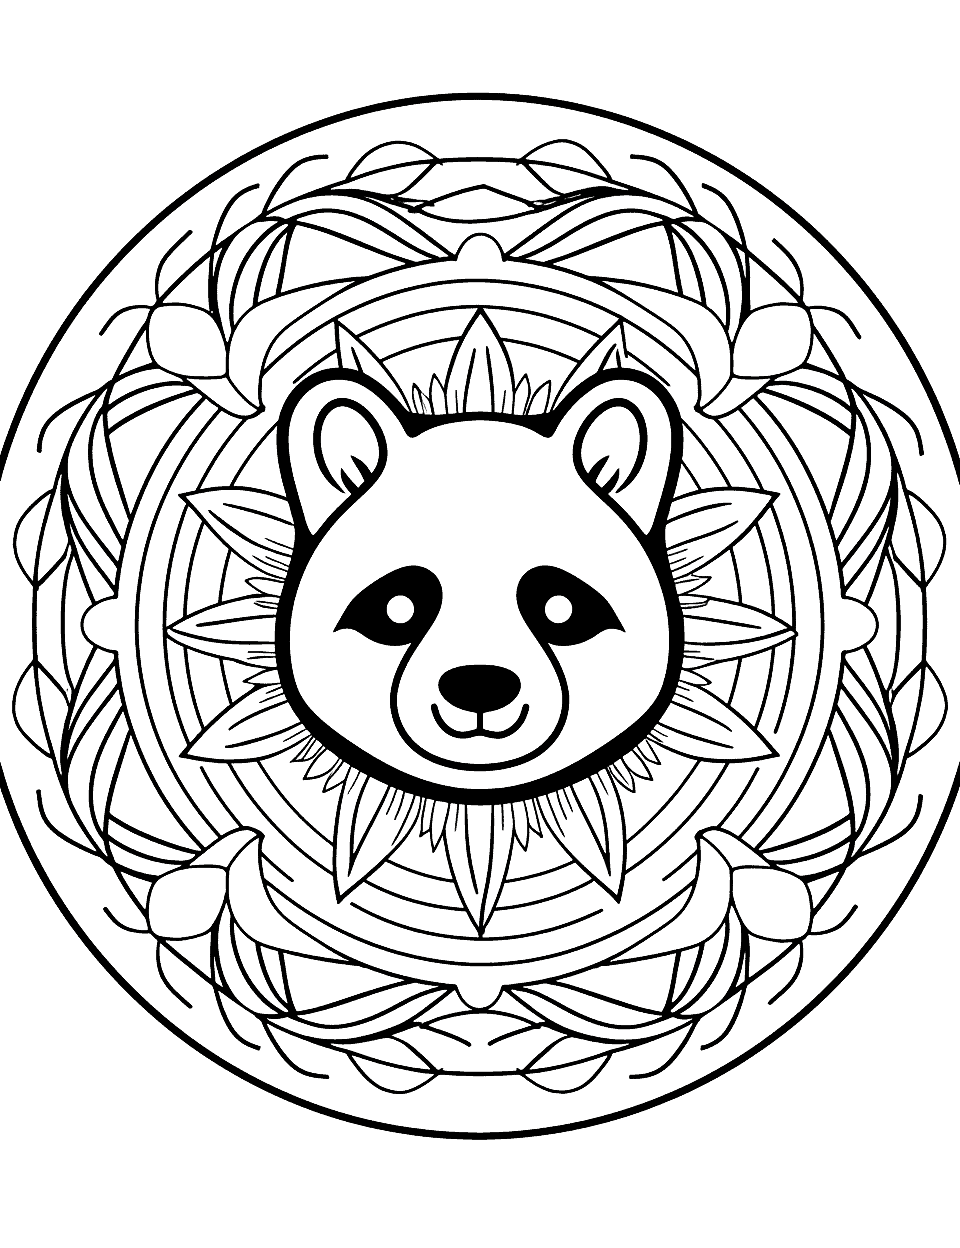 Peaceful Panda Mandala Coloring Page - A cute mandala with a panda munching bamboo at the center, surrounded by leafy patterns.